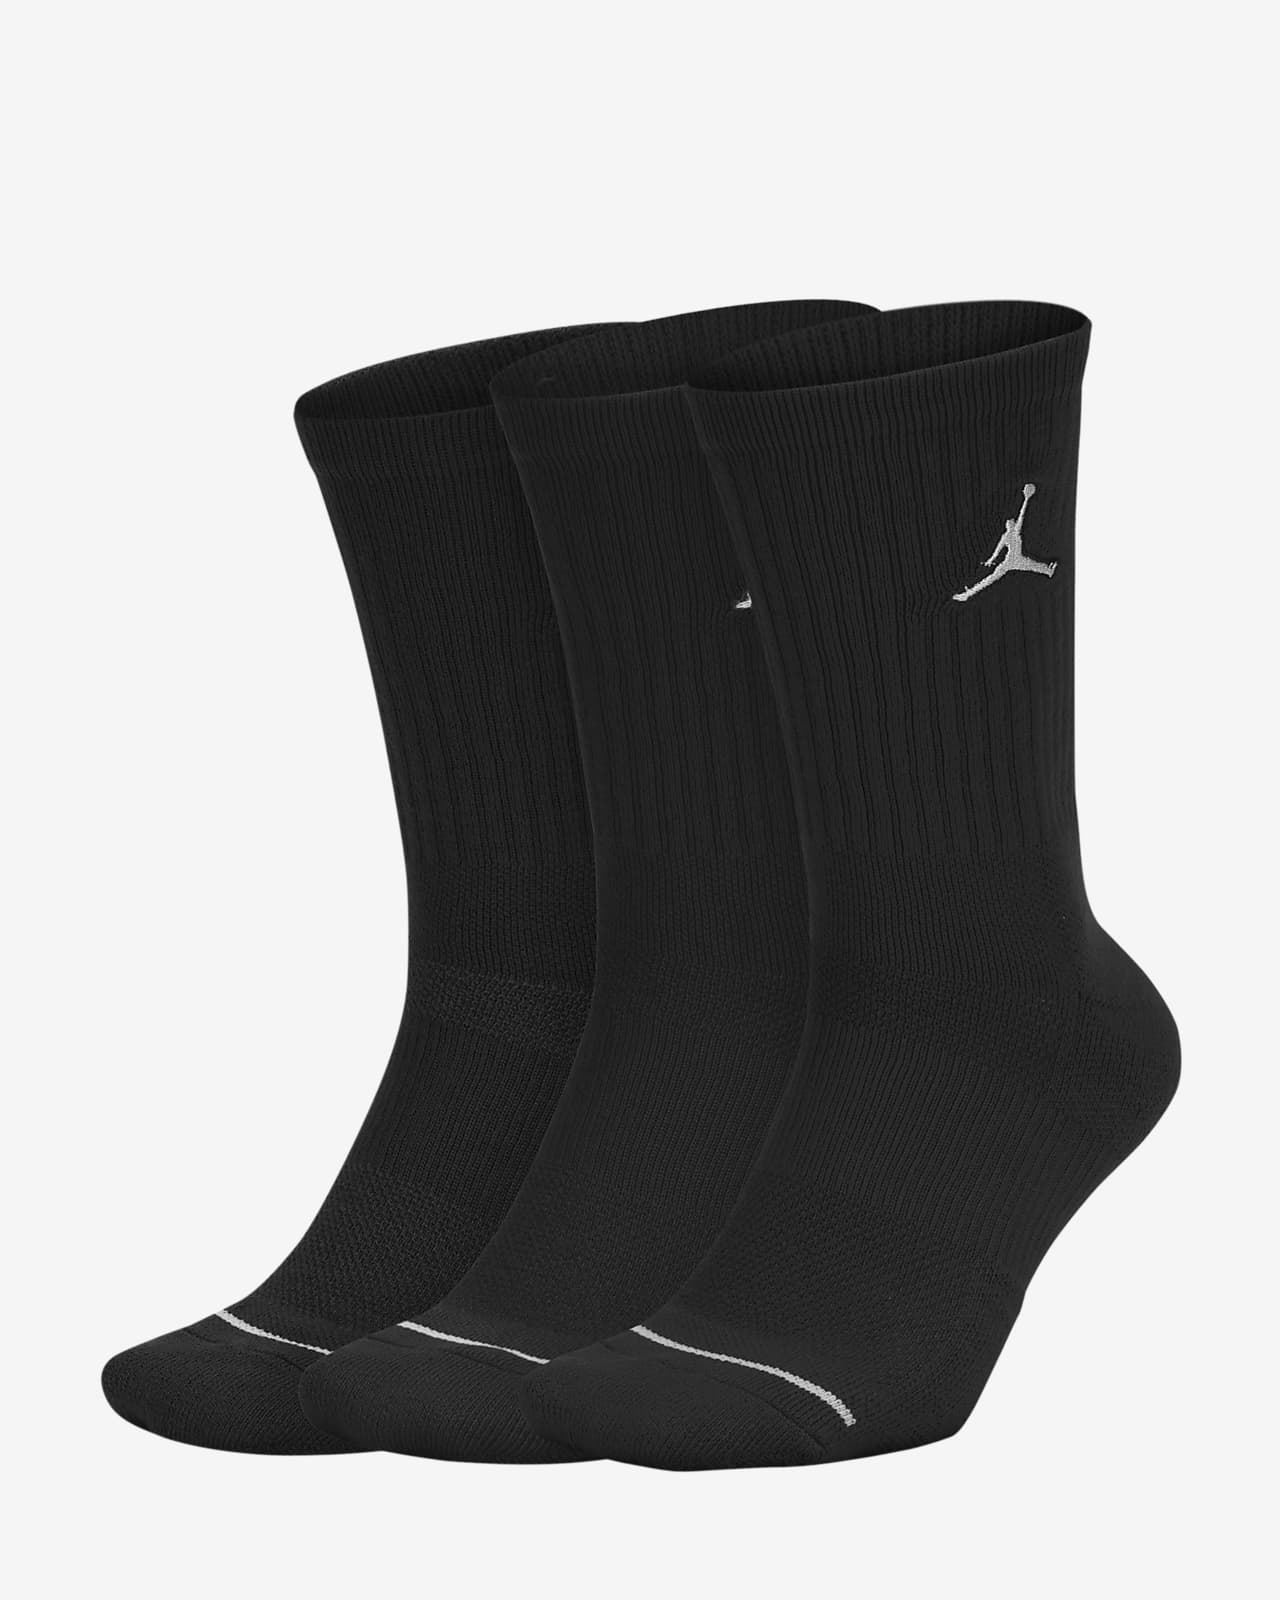 Calze Jordan Everyday Max di media lunghezza - Unisex (3 paia). Nike IT